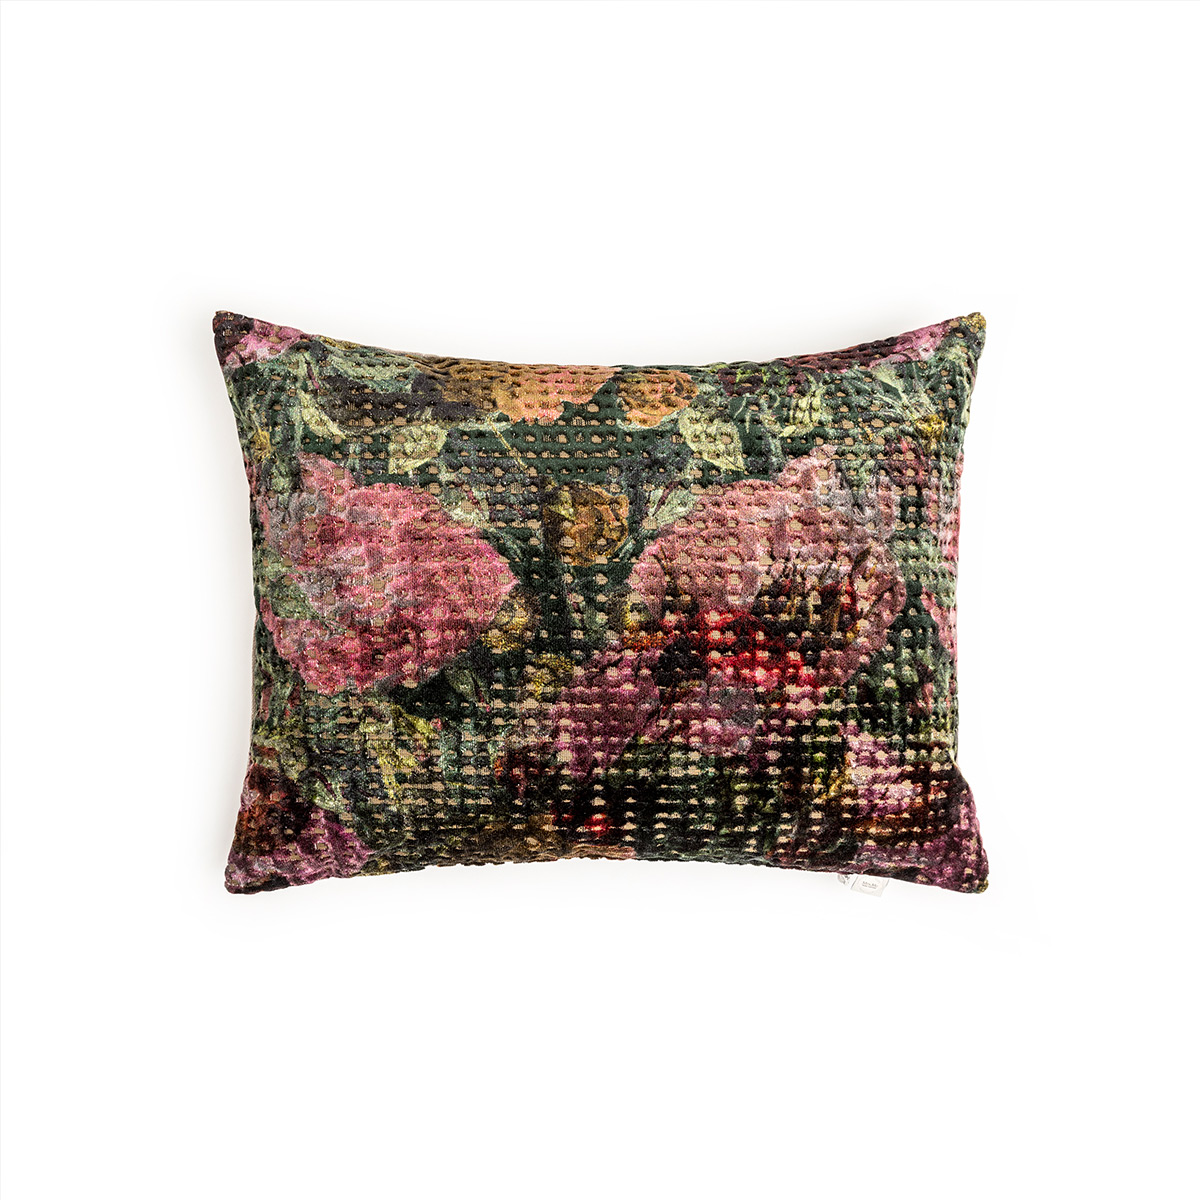 MrsMe Wonderlust cushion cover Bloom Lilac Green detail 1200x1200 1